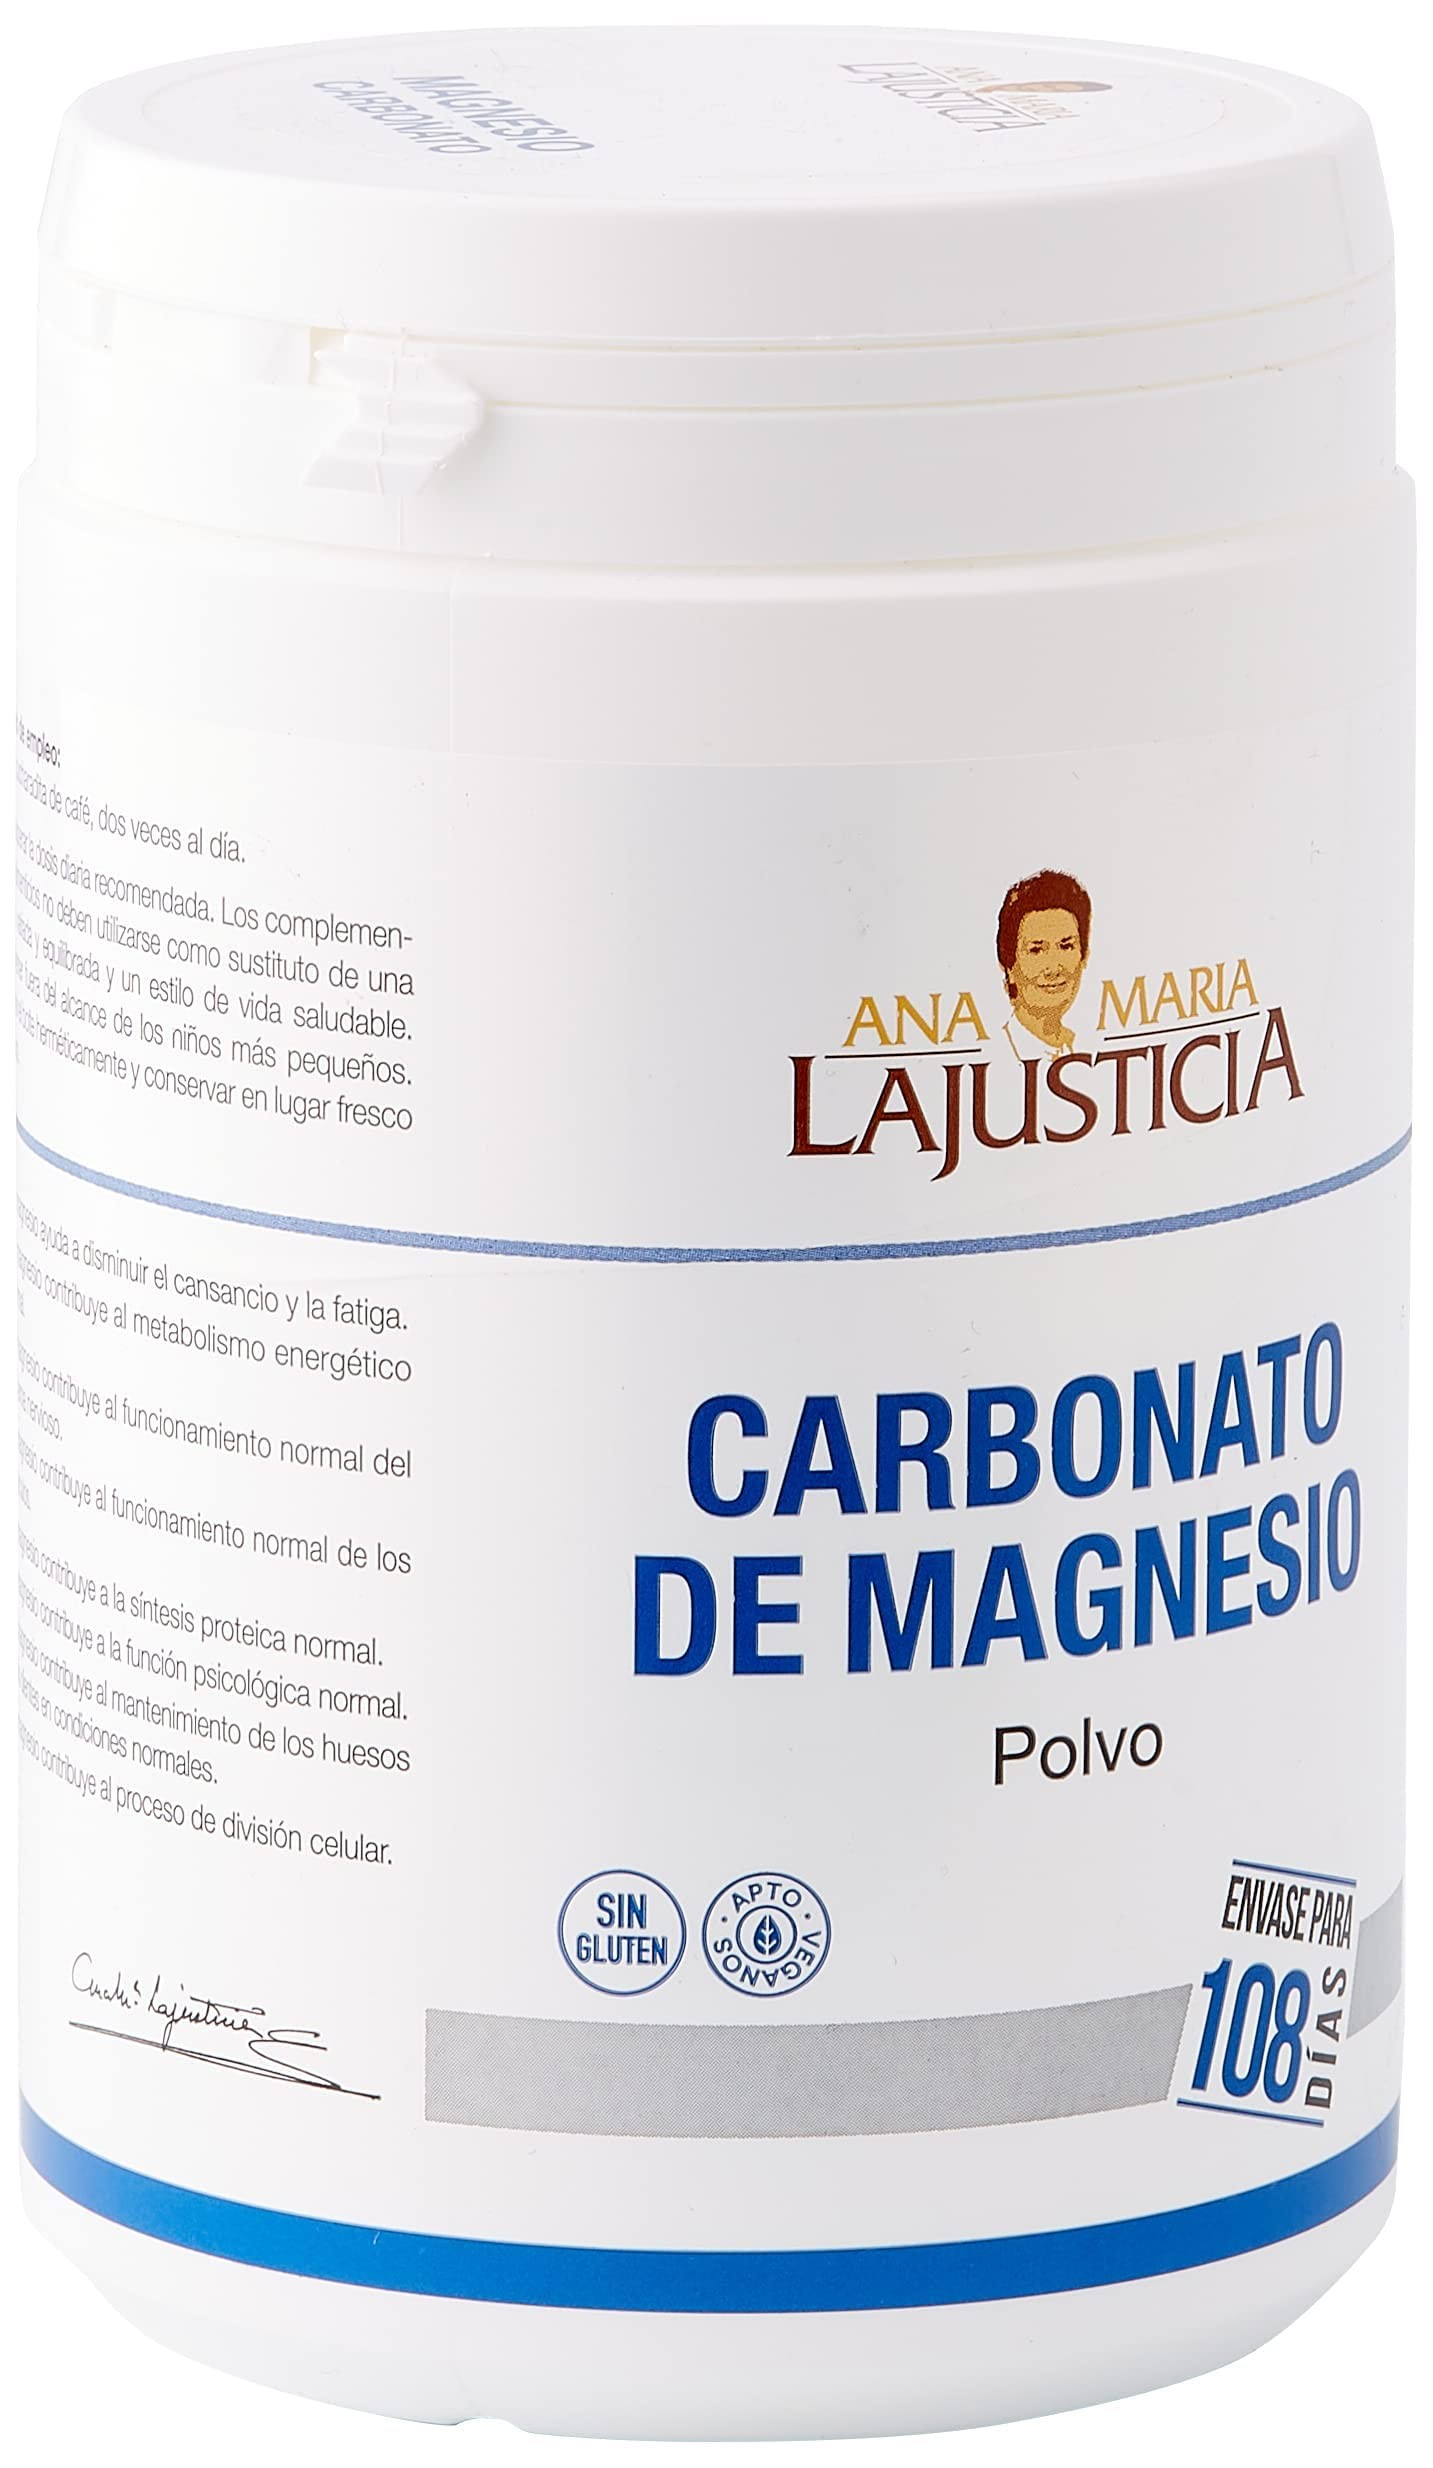 Ana Maria Lajusticia Carbonato de Magnesio 130g